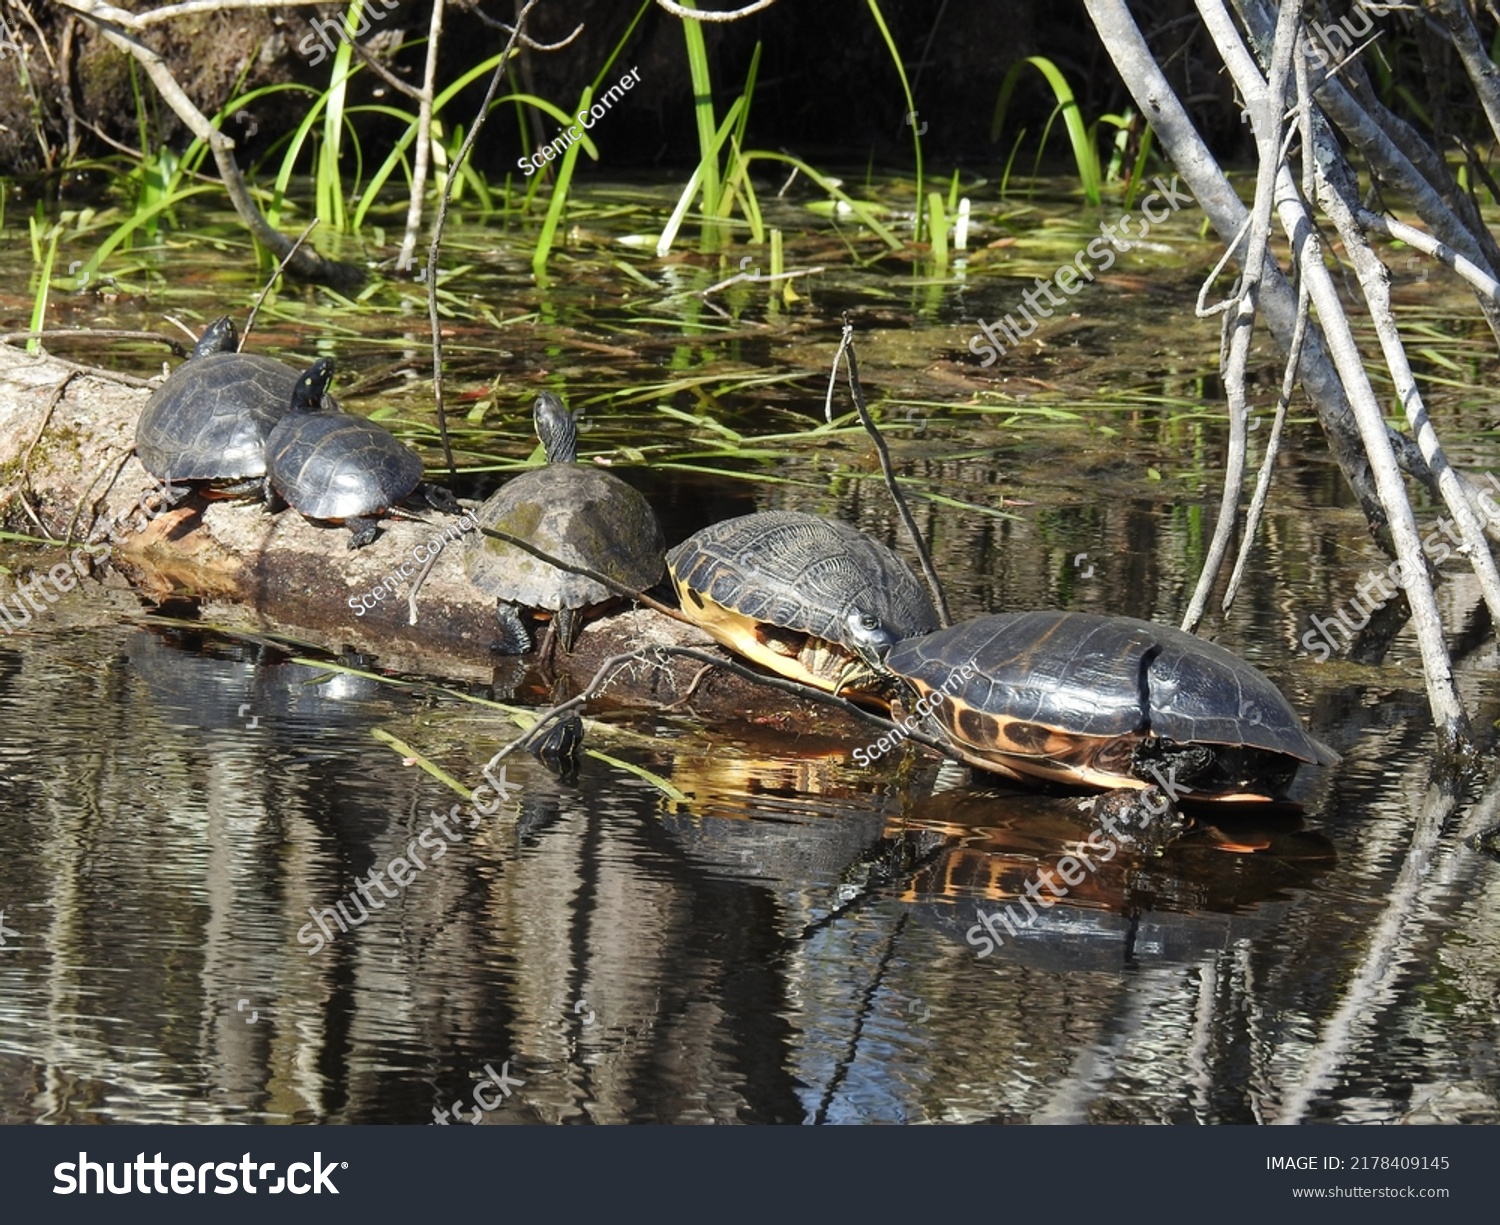 A group of aquatic turtles sunbathing on a log in the Great Dismal Swamp National Wildlife Refuge, Suffolk, Virginia. #2178409145